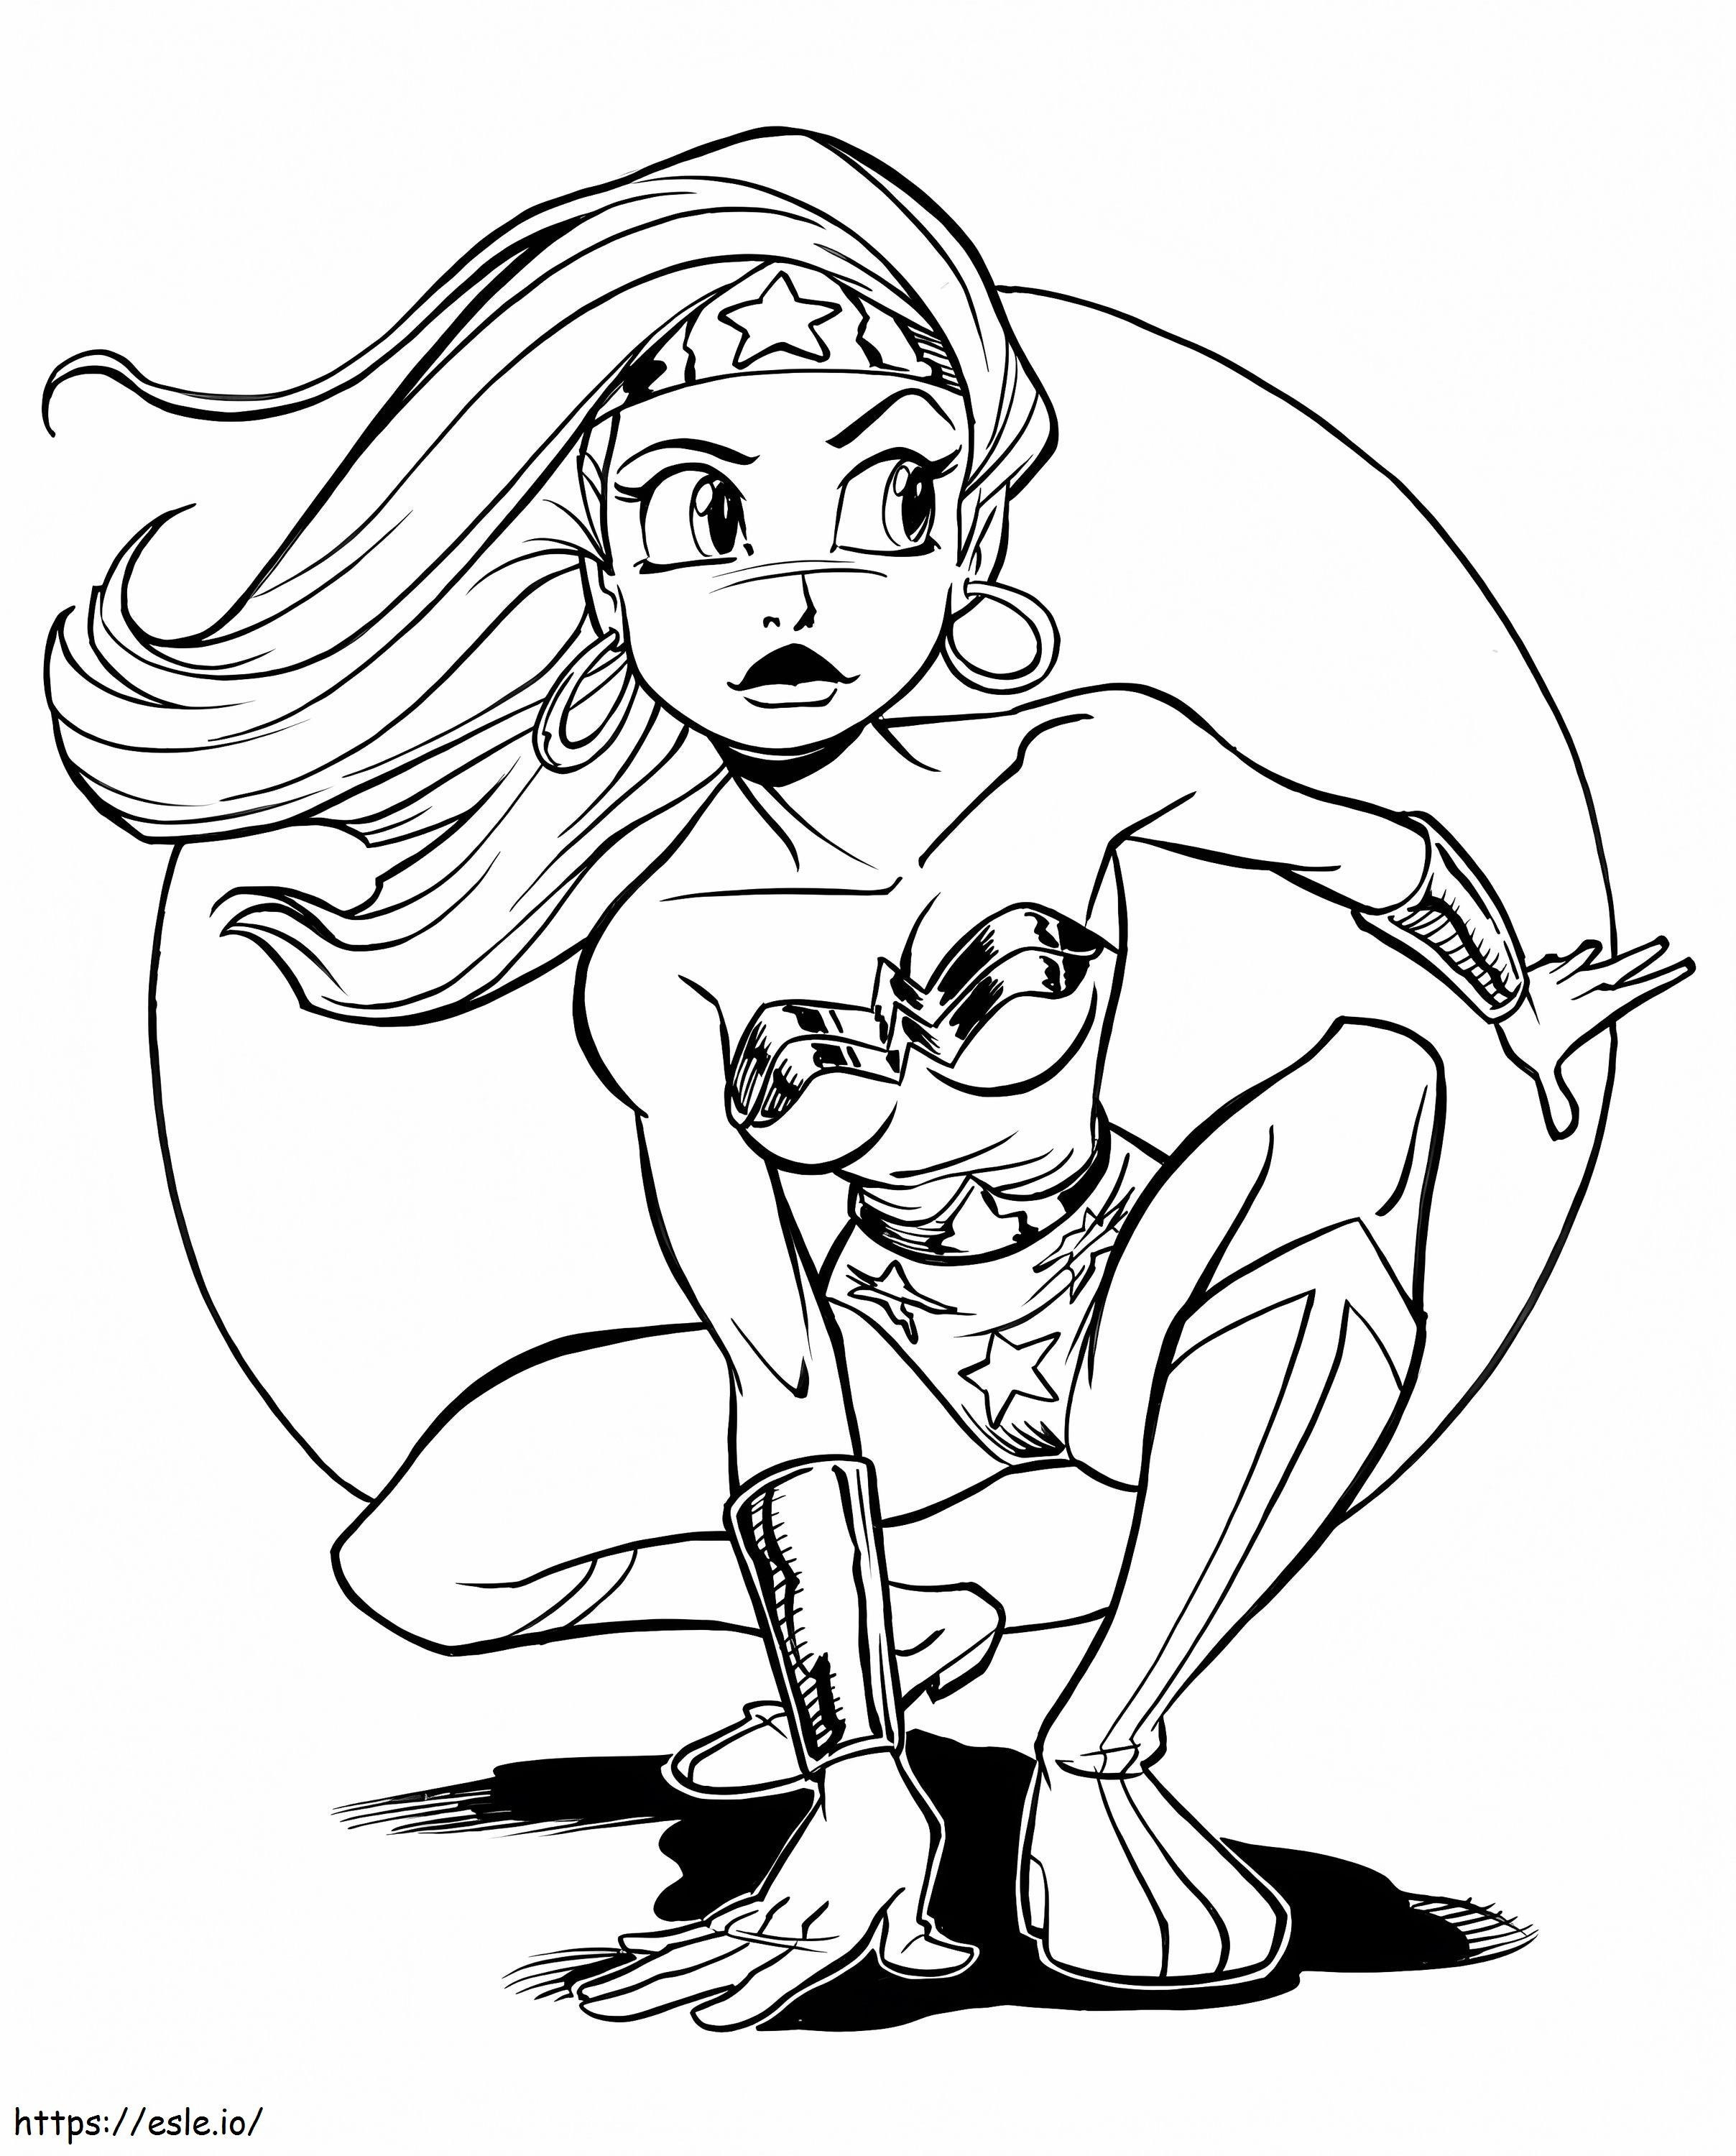 1551355414 Wonder Woman Squat Final By Tombancroft D6Rkht4 coloring page